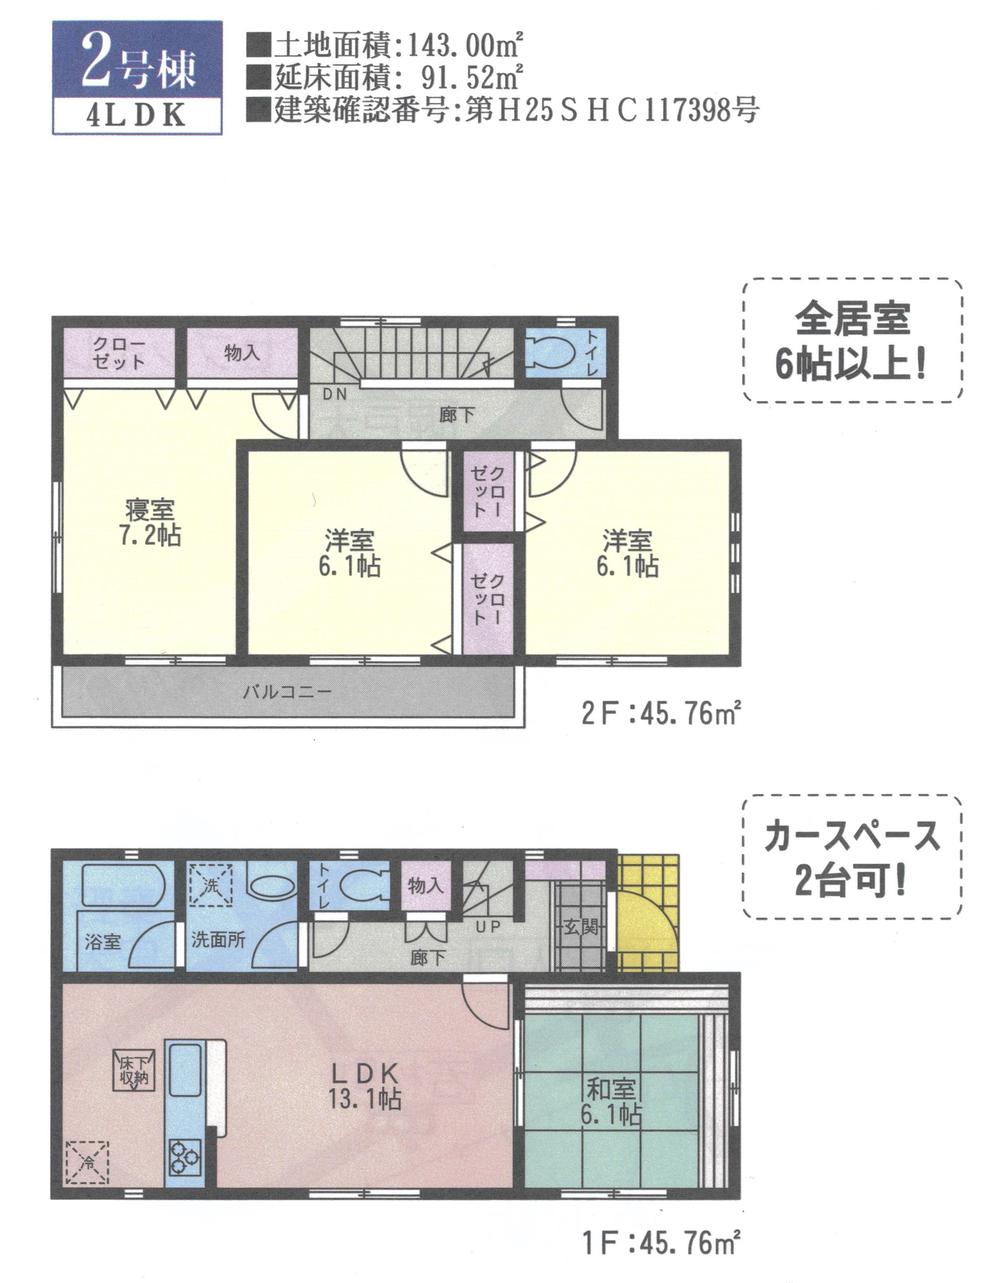 Floor plan. 24,800,000 yen, 4LDK, Land area 143 sq m , Building area 91.52 sq m